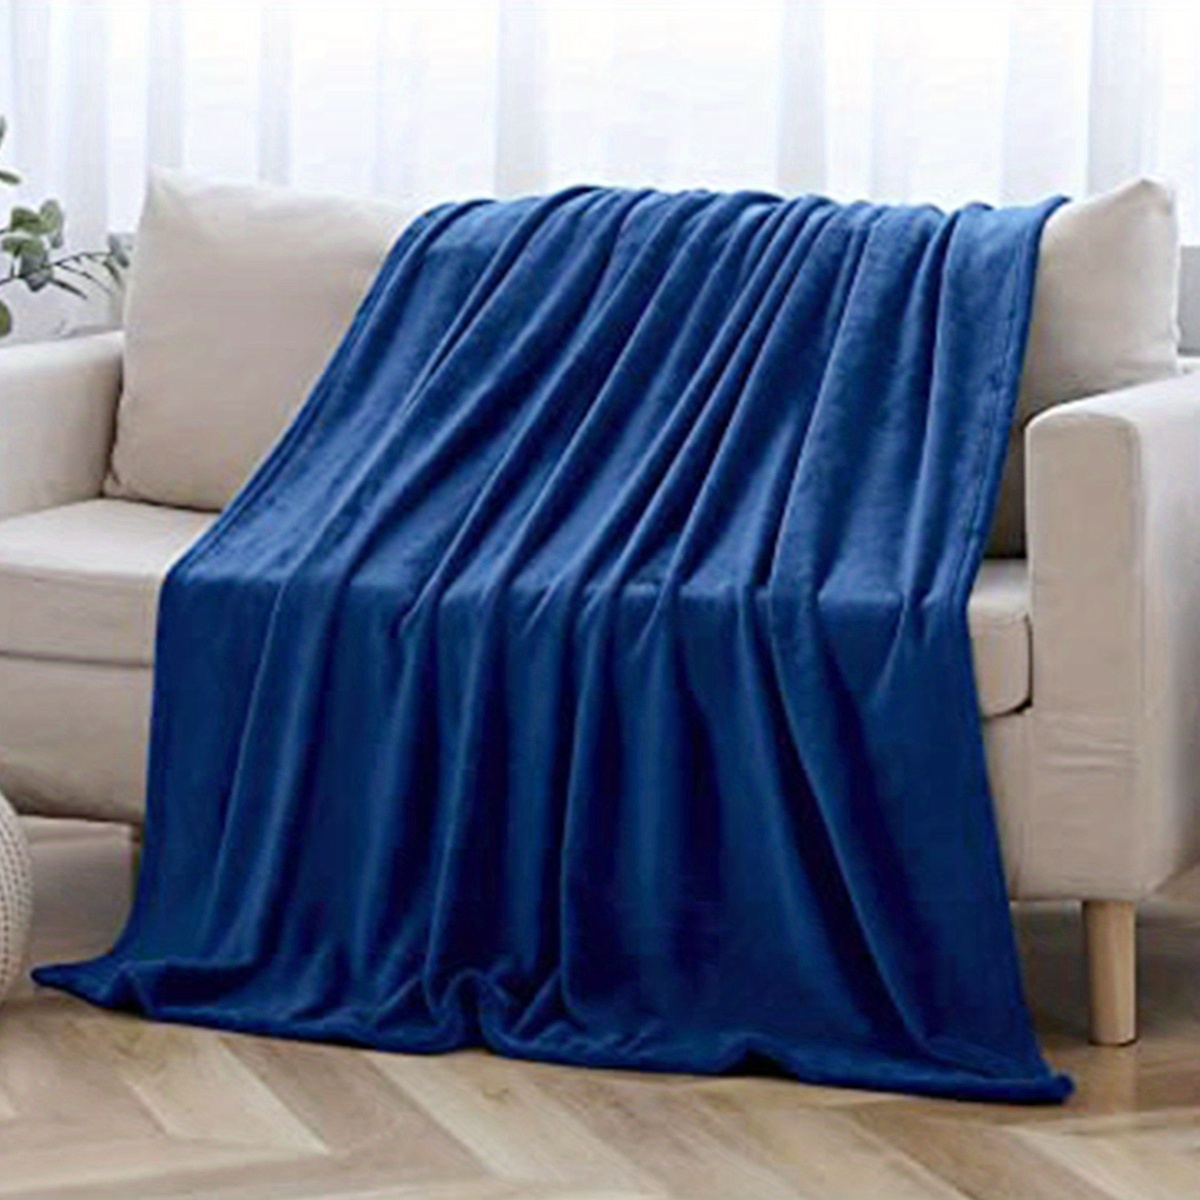 70x100cm Throw Blankets Flannel Fleece Throw Plush Cozy Soft Nap Blanket